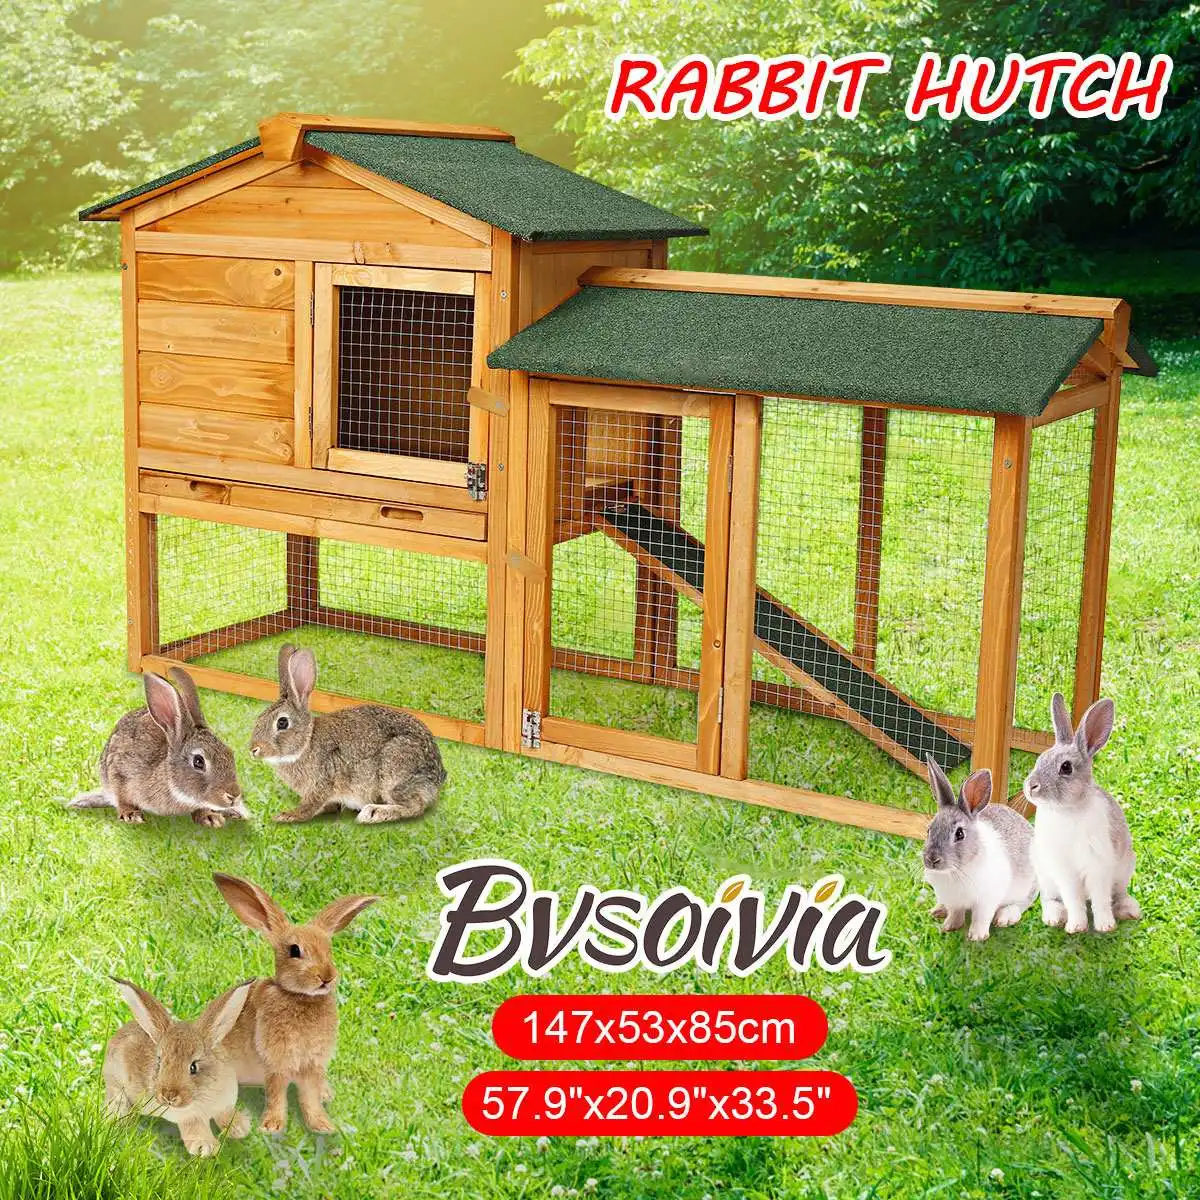 

Indoor Outdoor Wood Rabbit Hutch Chicken Coop Cage Small Animal Guinea Pigs Pet House 147 x 53 x 85cm